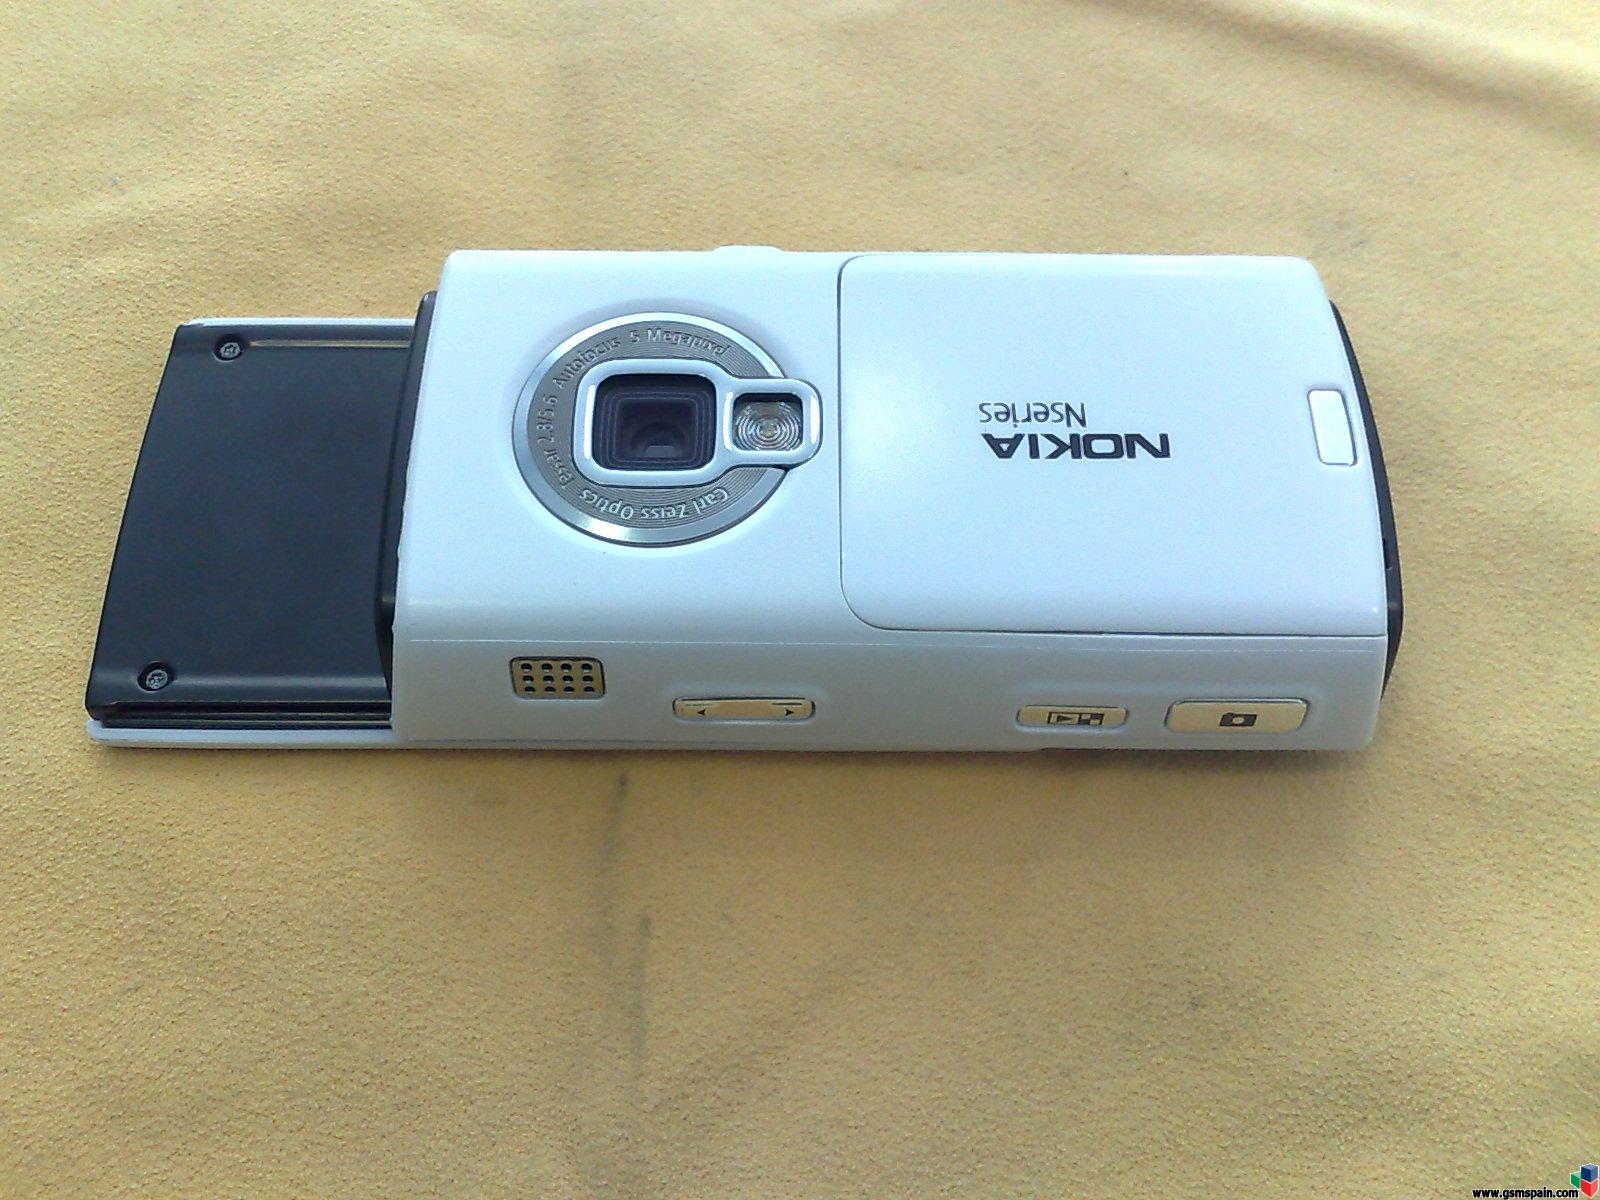 Vendo Nokia N95 8Gb Blanco.